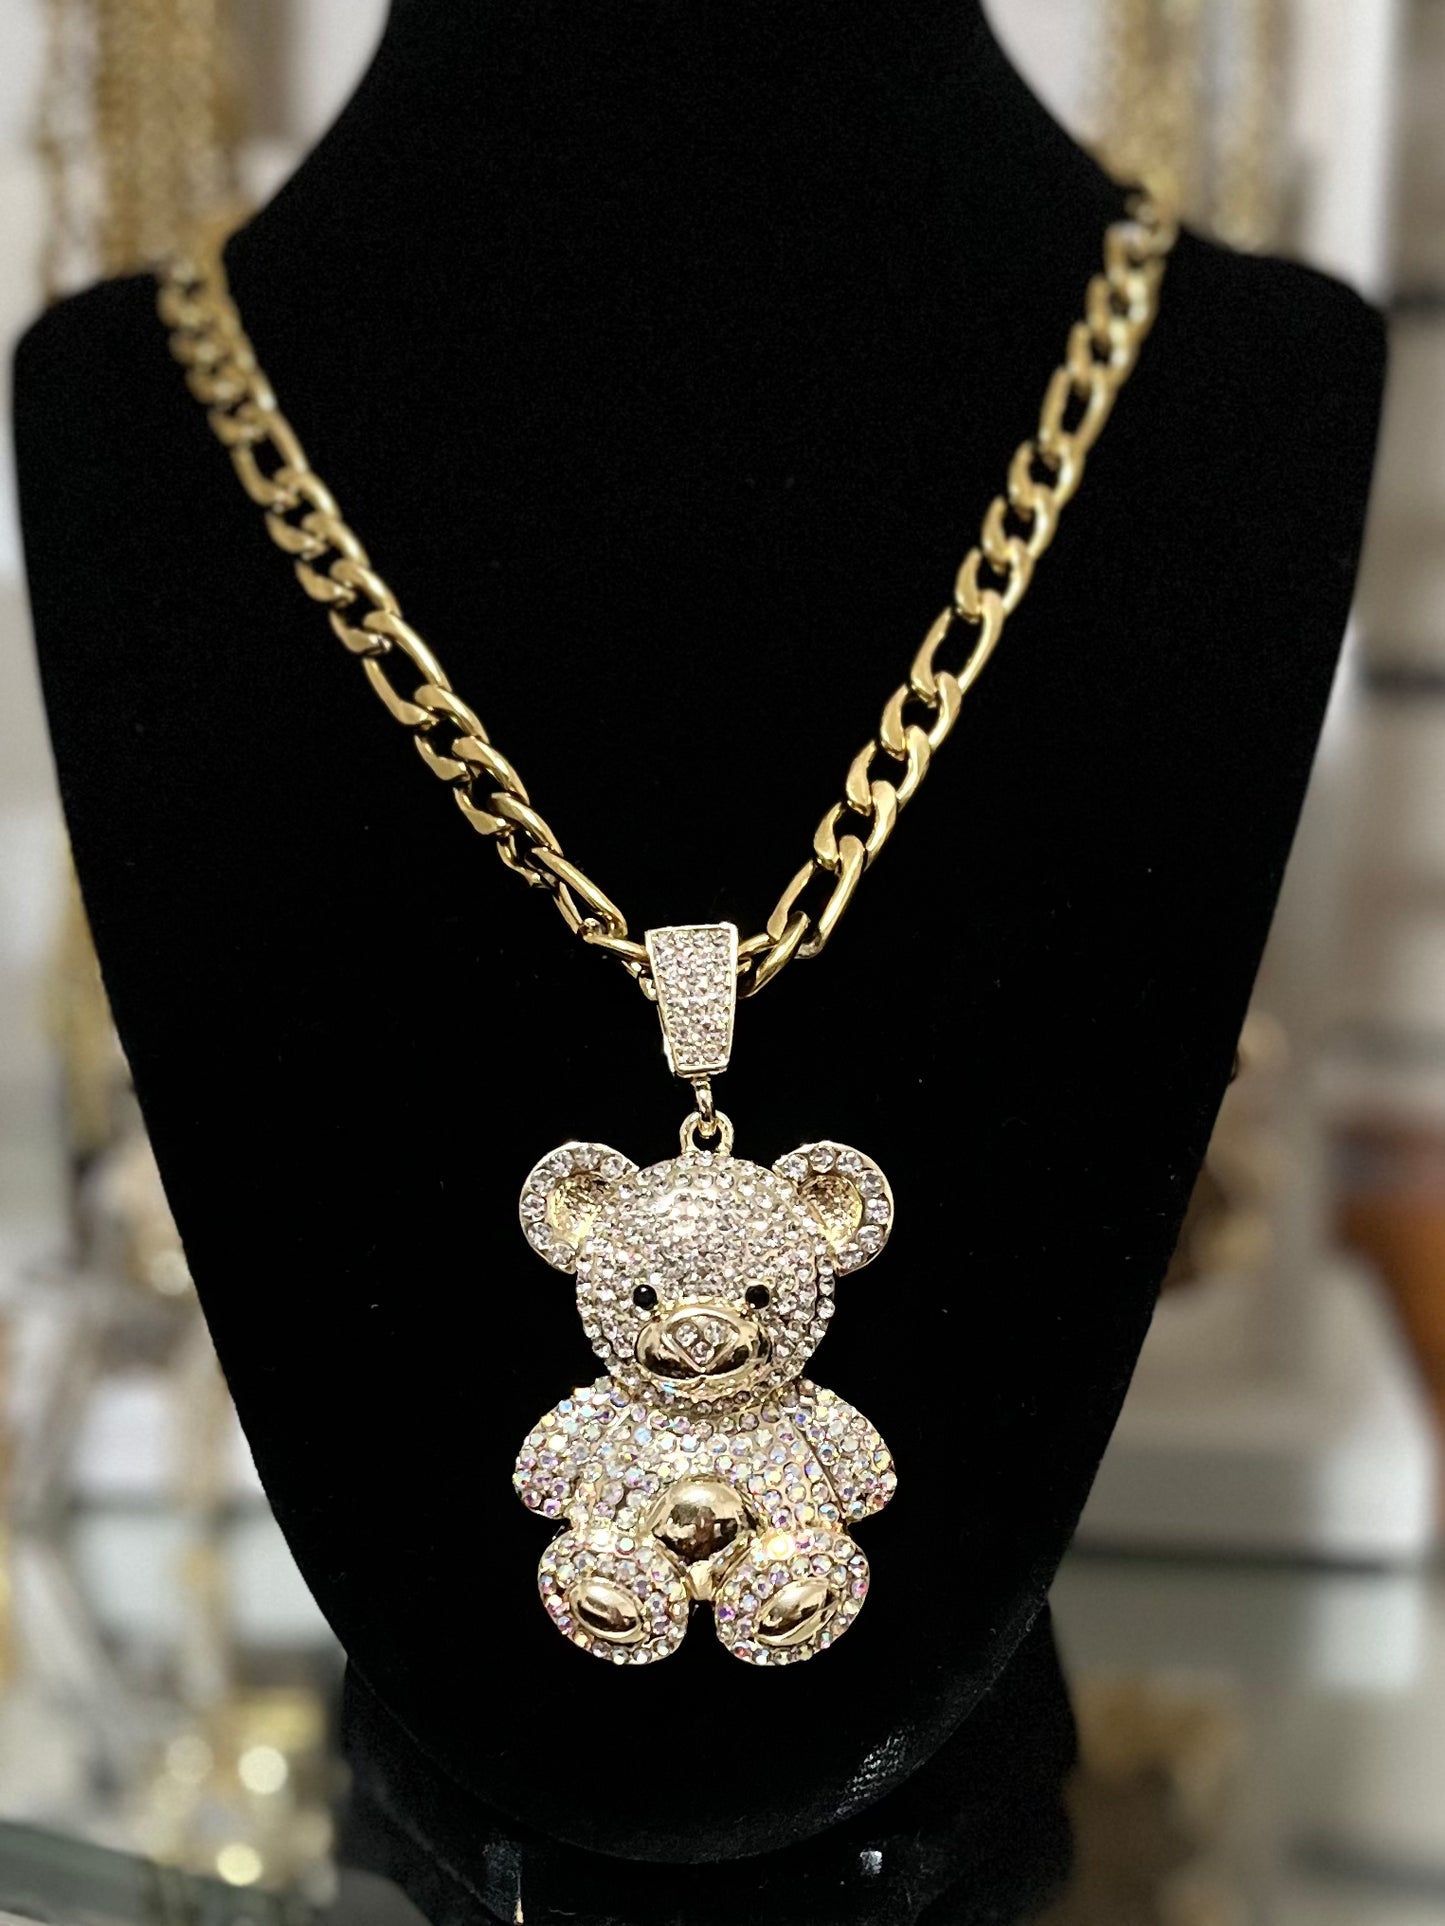 Teddy Bear Necklaces